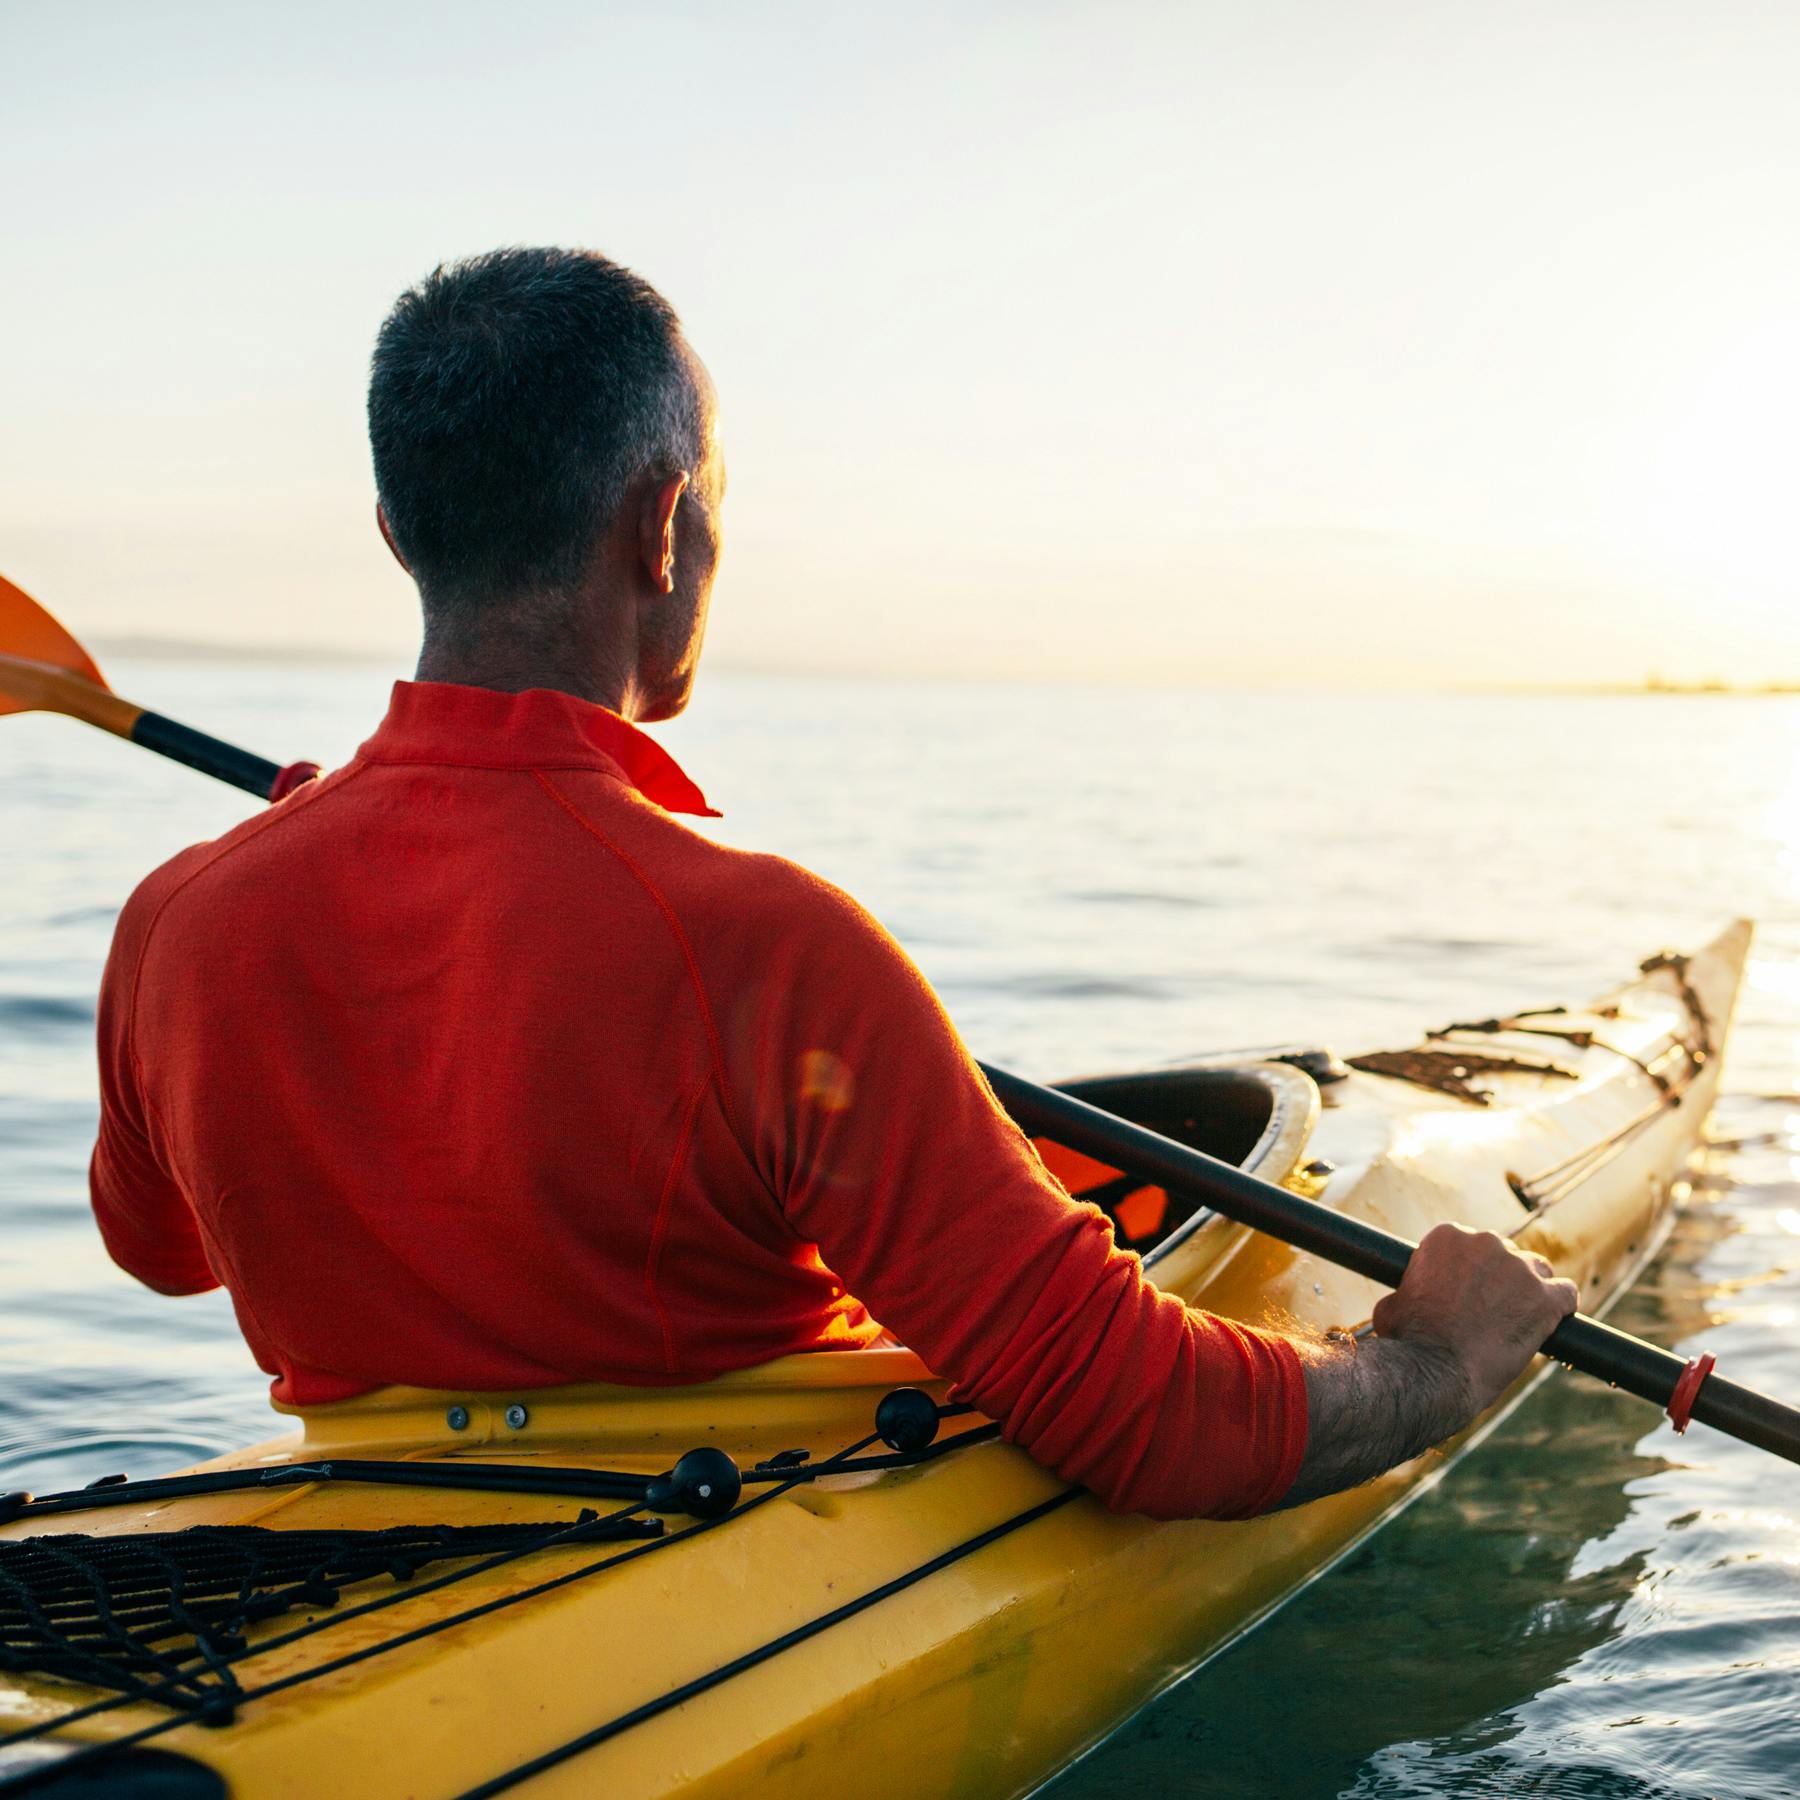 Man in kayak paddling in the ocean towards the sunrise.